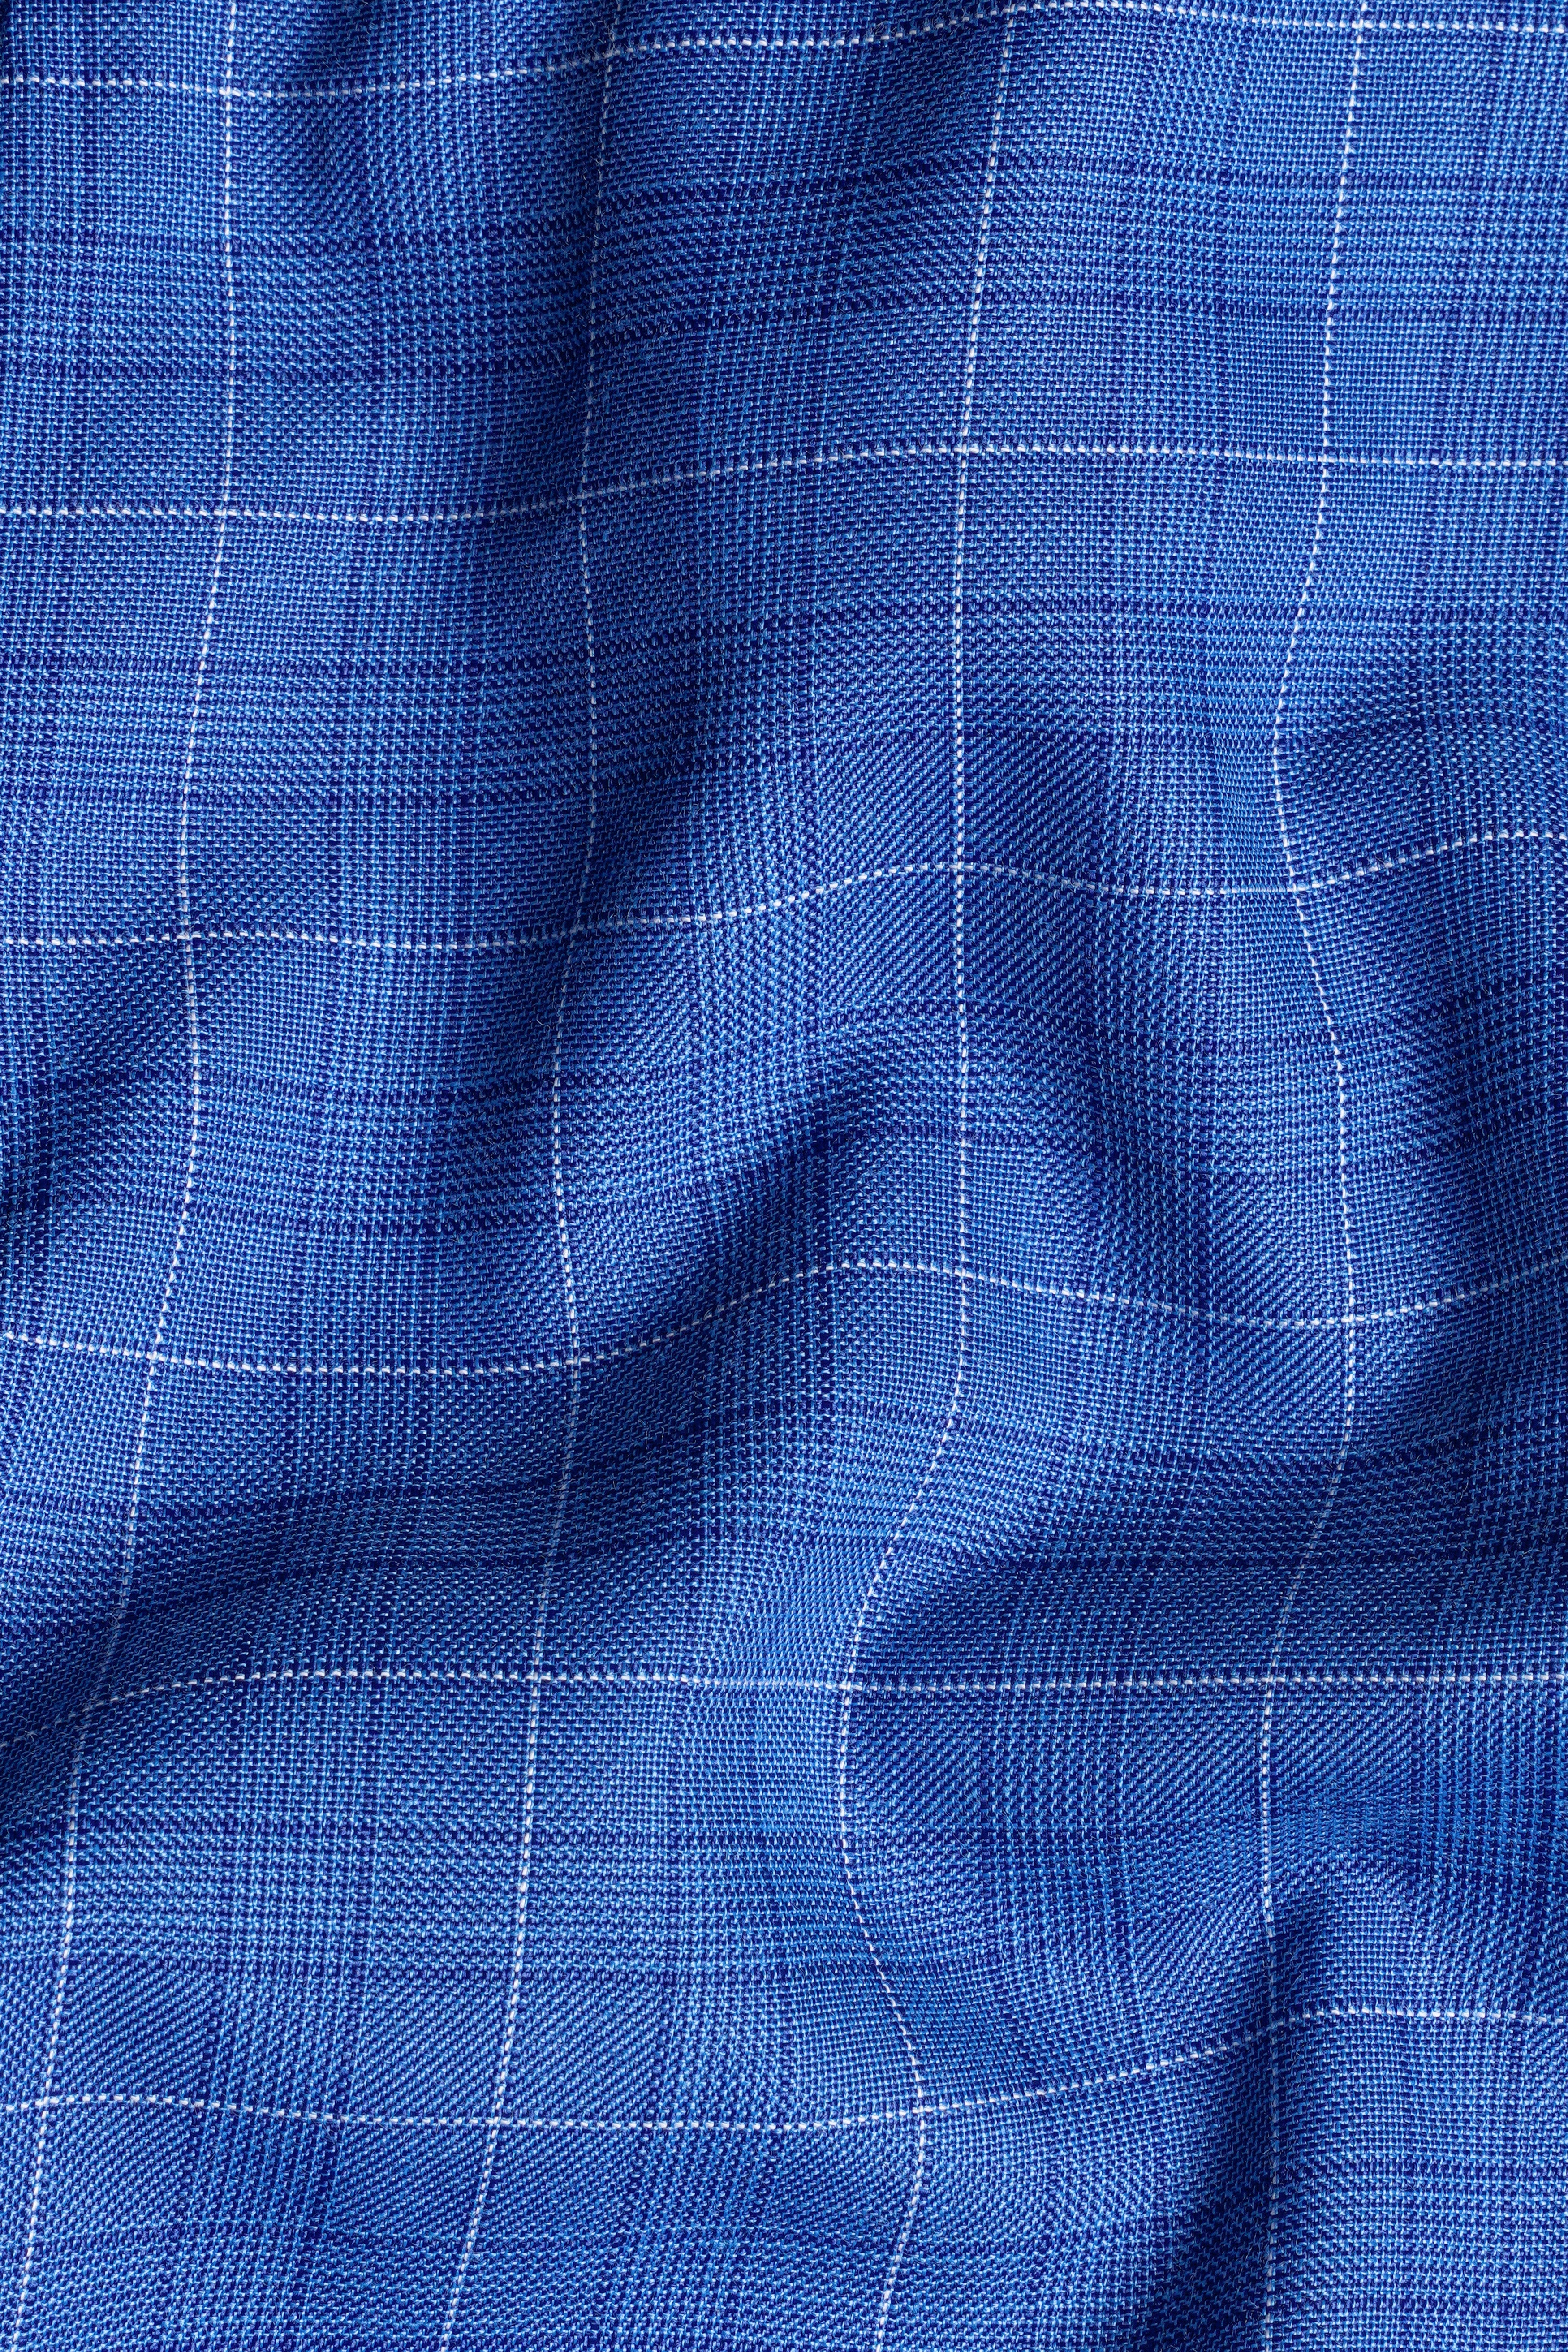 Cobalt Blue Checkered Wool Rich Waistcoat V2947-36, V2947-38, V2947-40, V2947-42, V2947-44, V2947-46, V2947-48, V2947-50, V2947-47, V2947-54, V2947-56, V2947-58, V2947-60